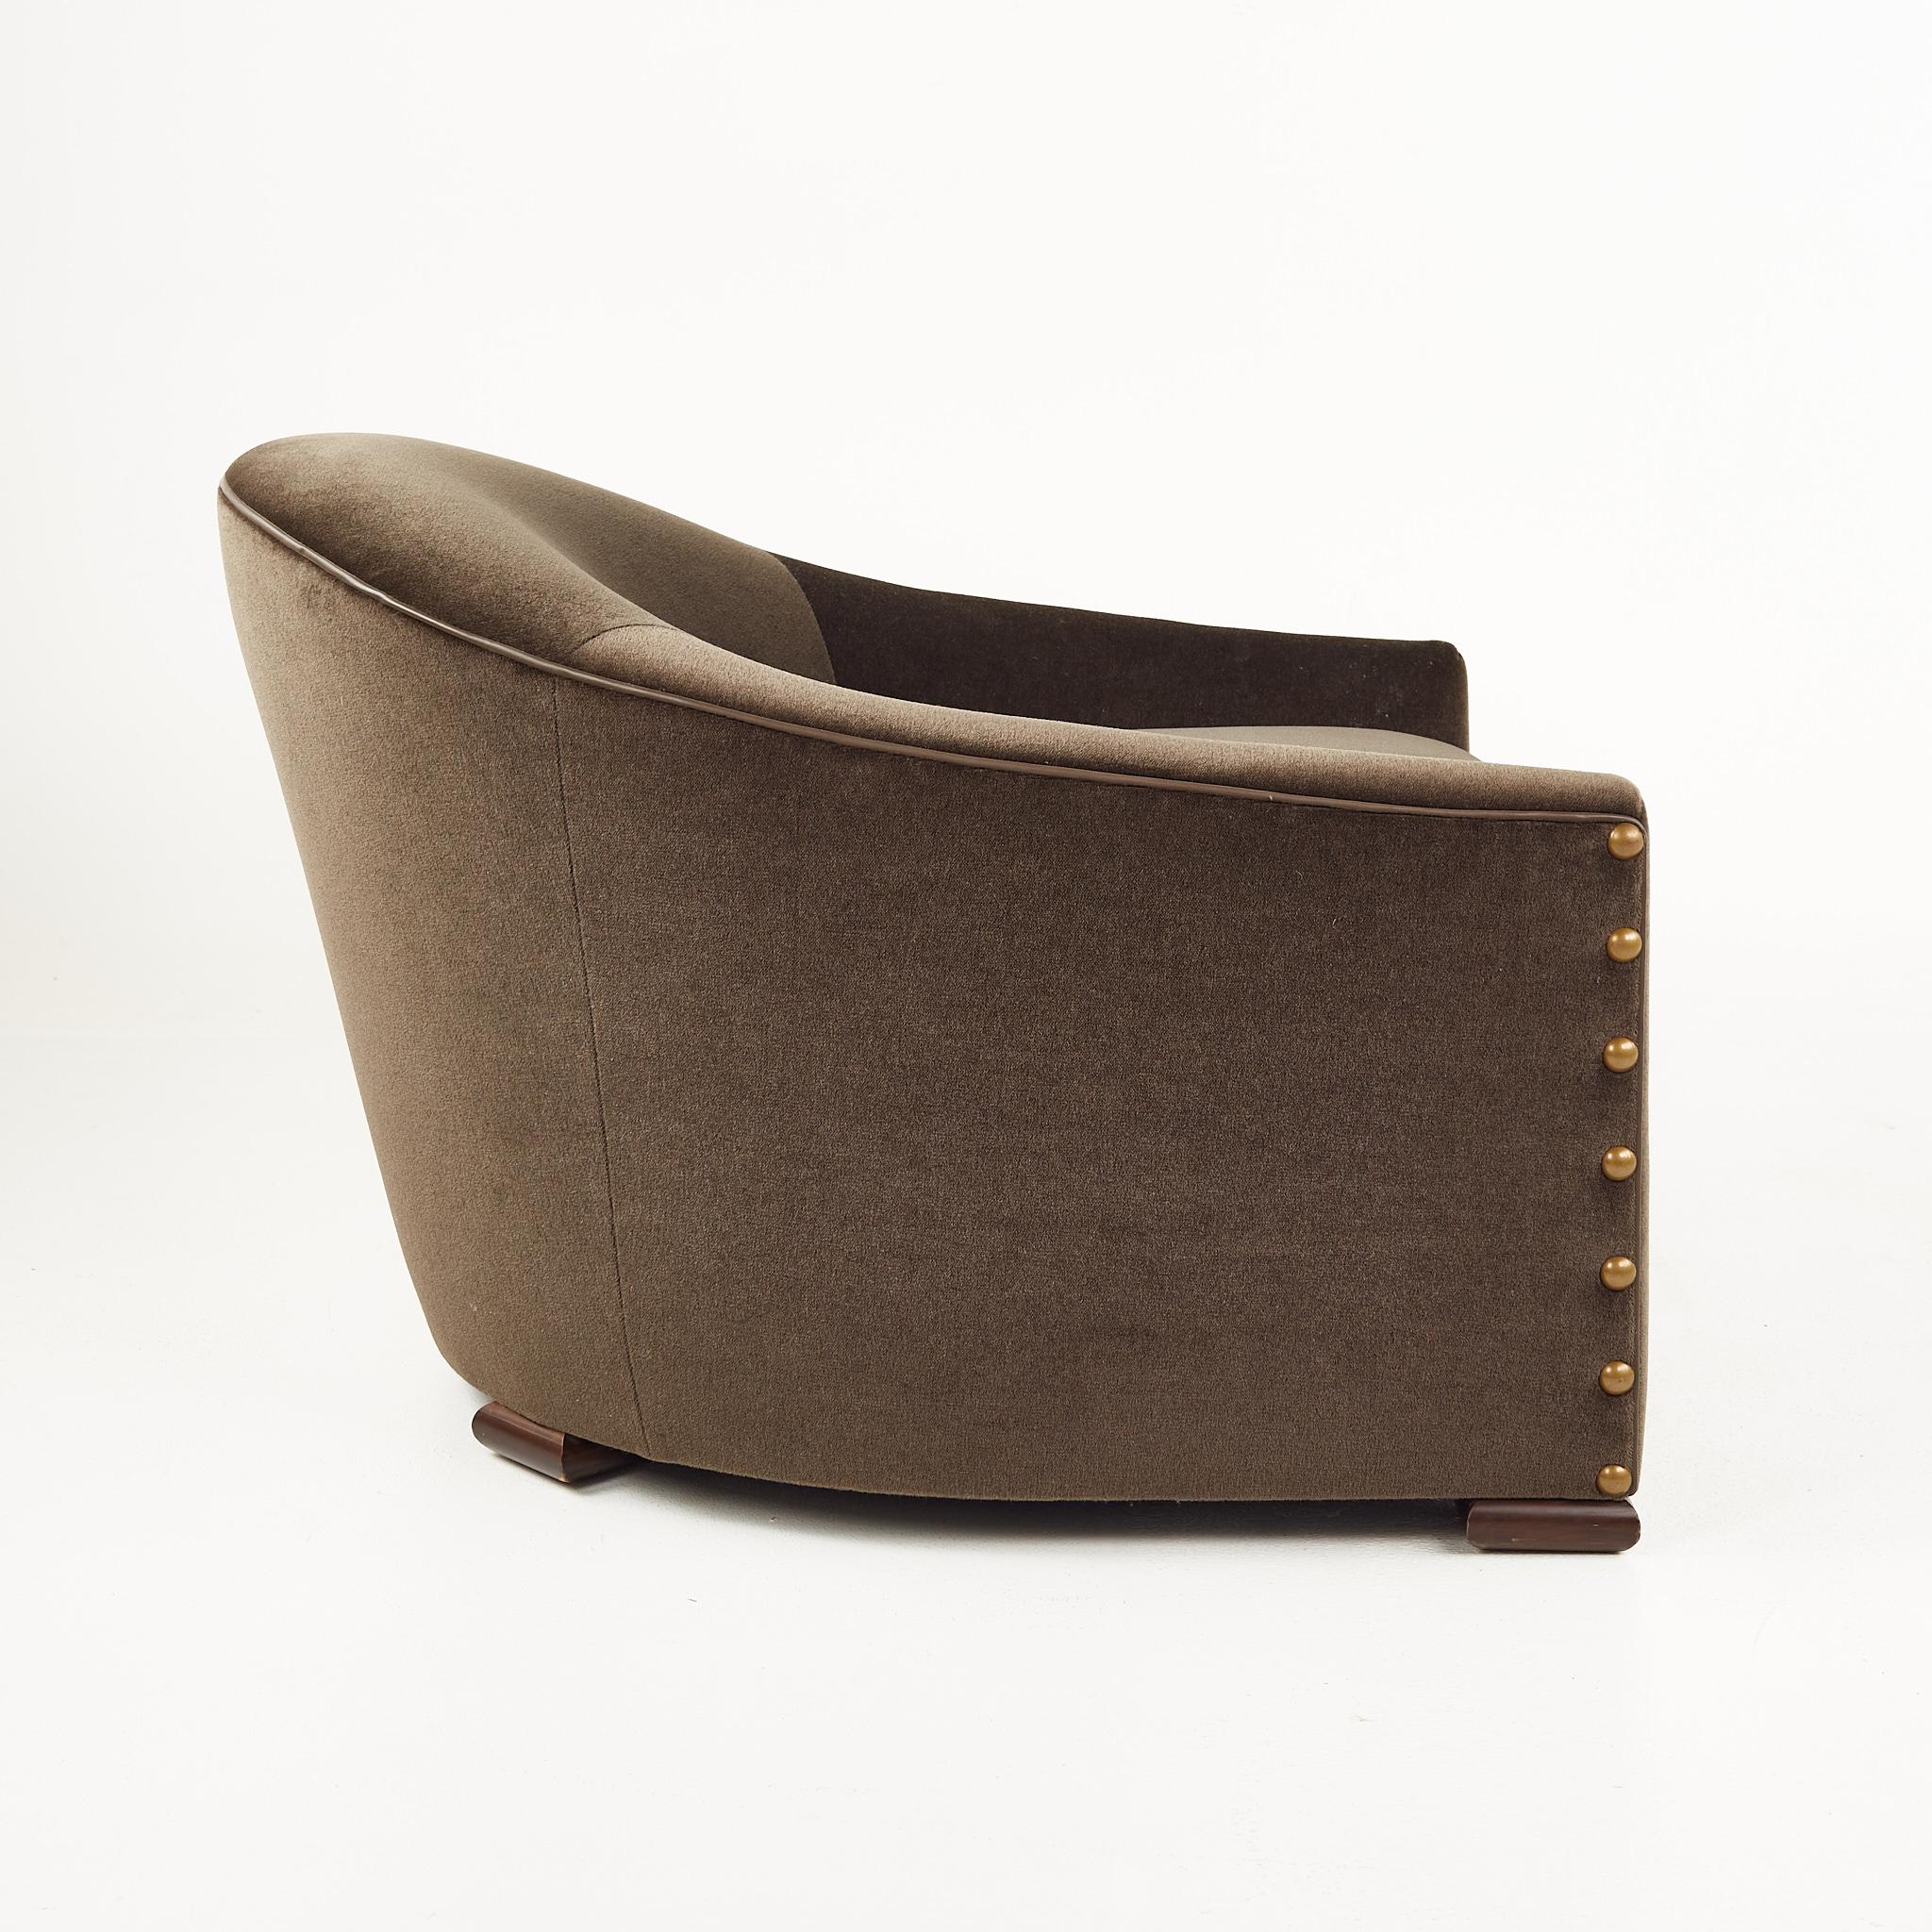 American Mattaliano Contemporary Modern Mohair Lounge Chair